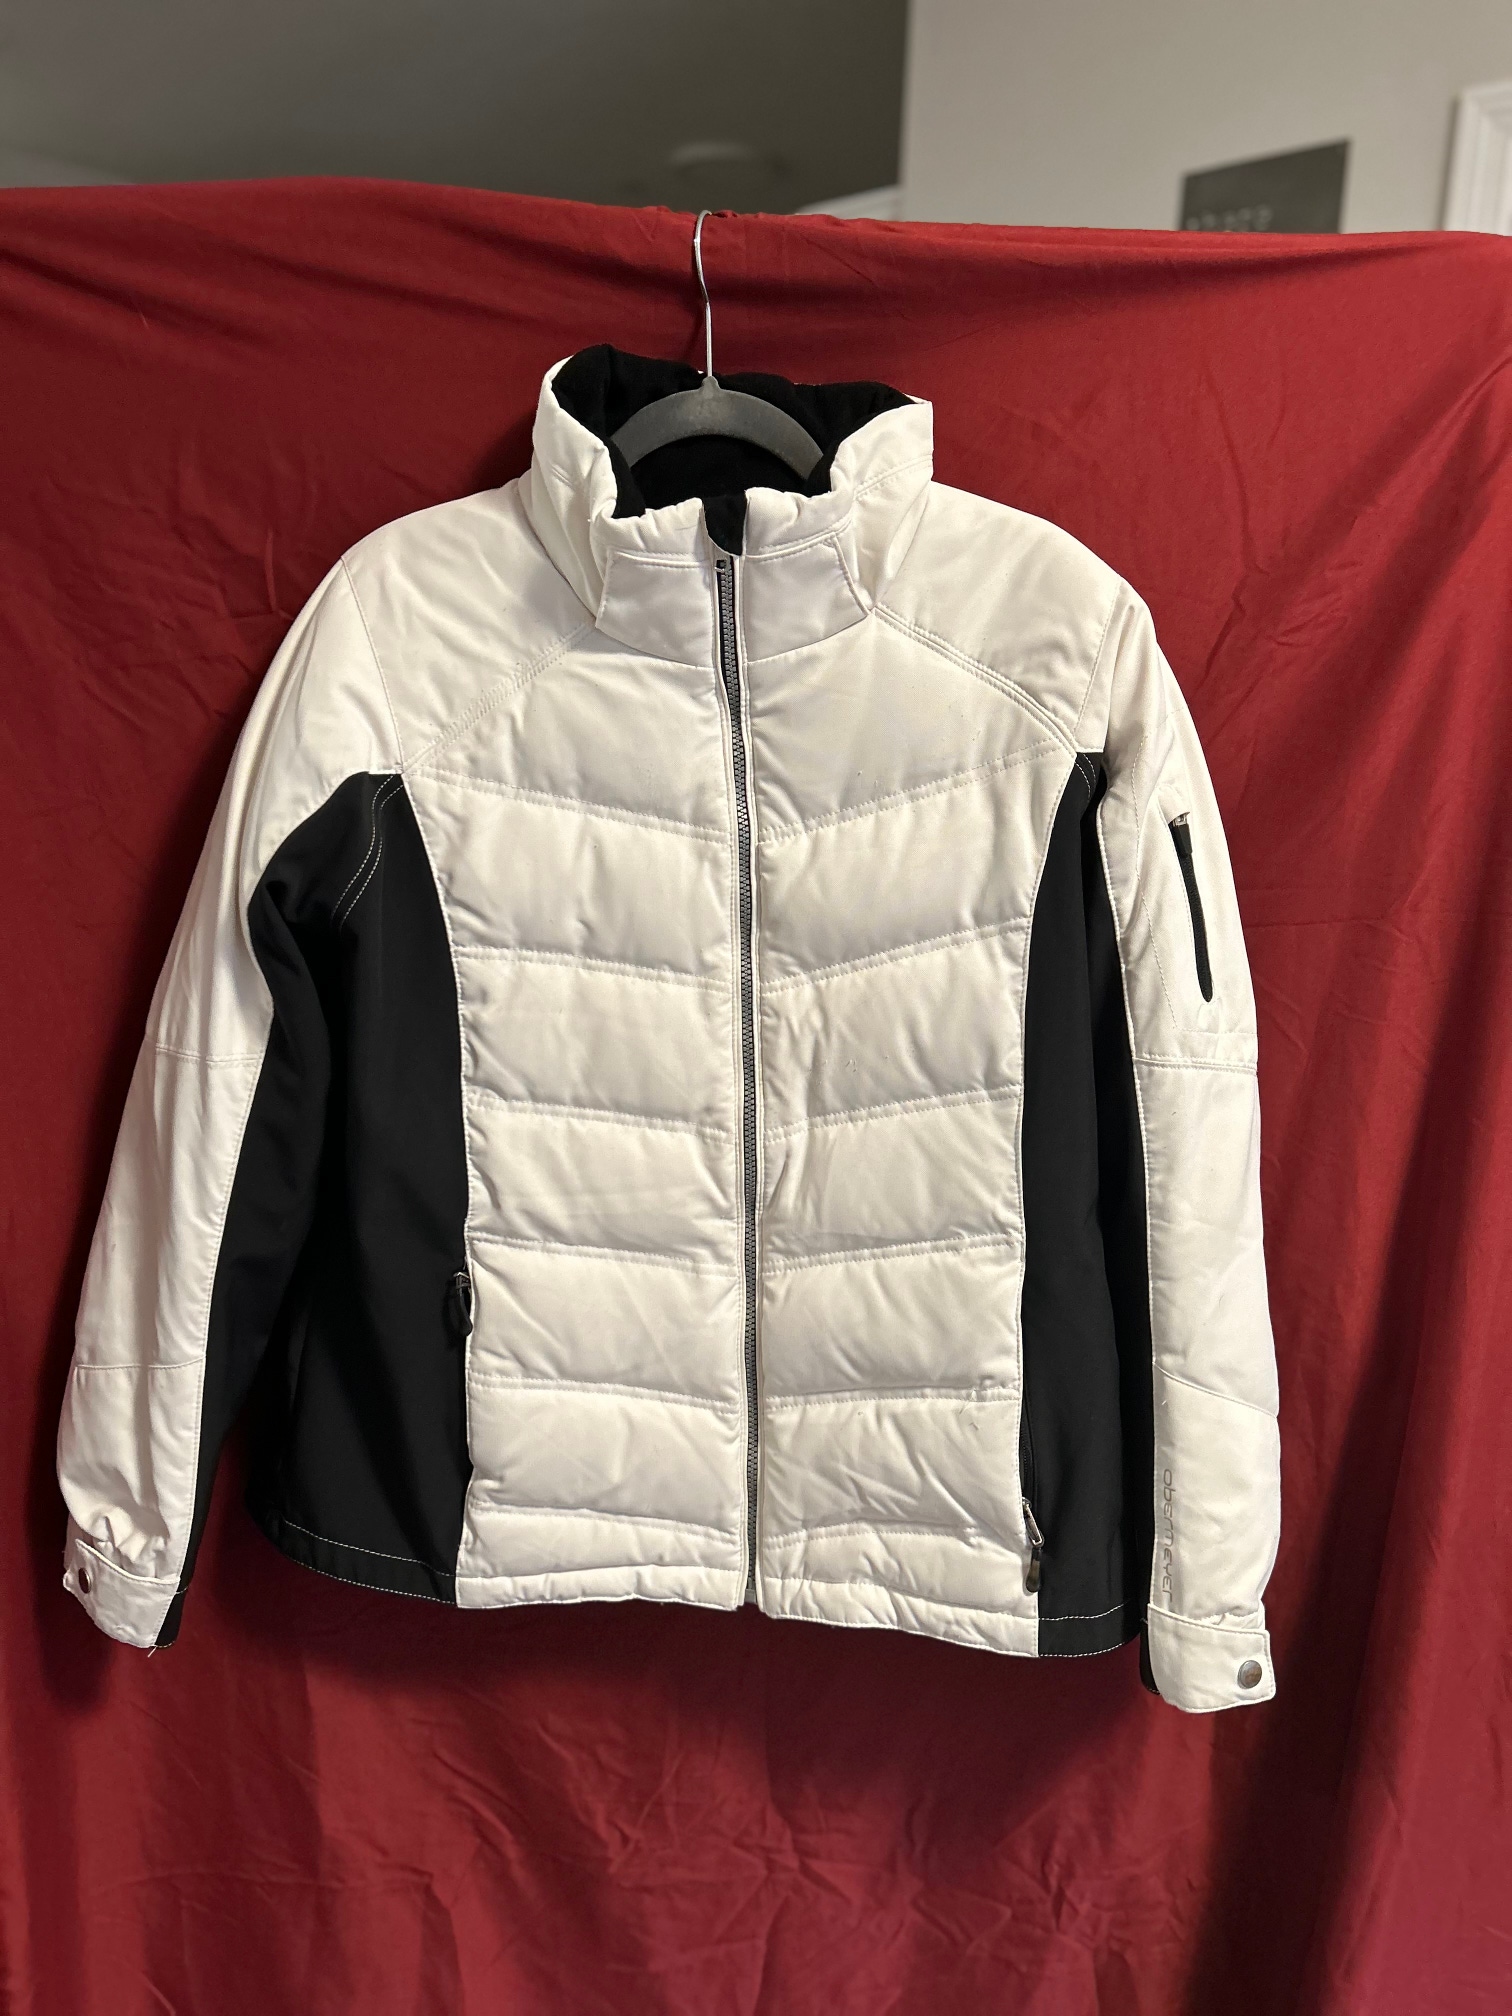 Used Obermeyer Women's Circuit Down Insulated Jacket - Missing Zip In Hood